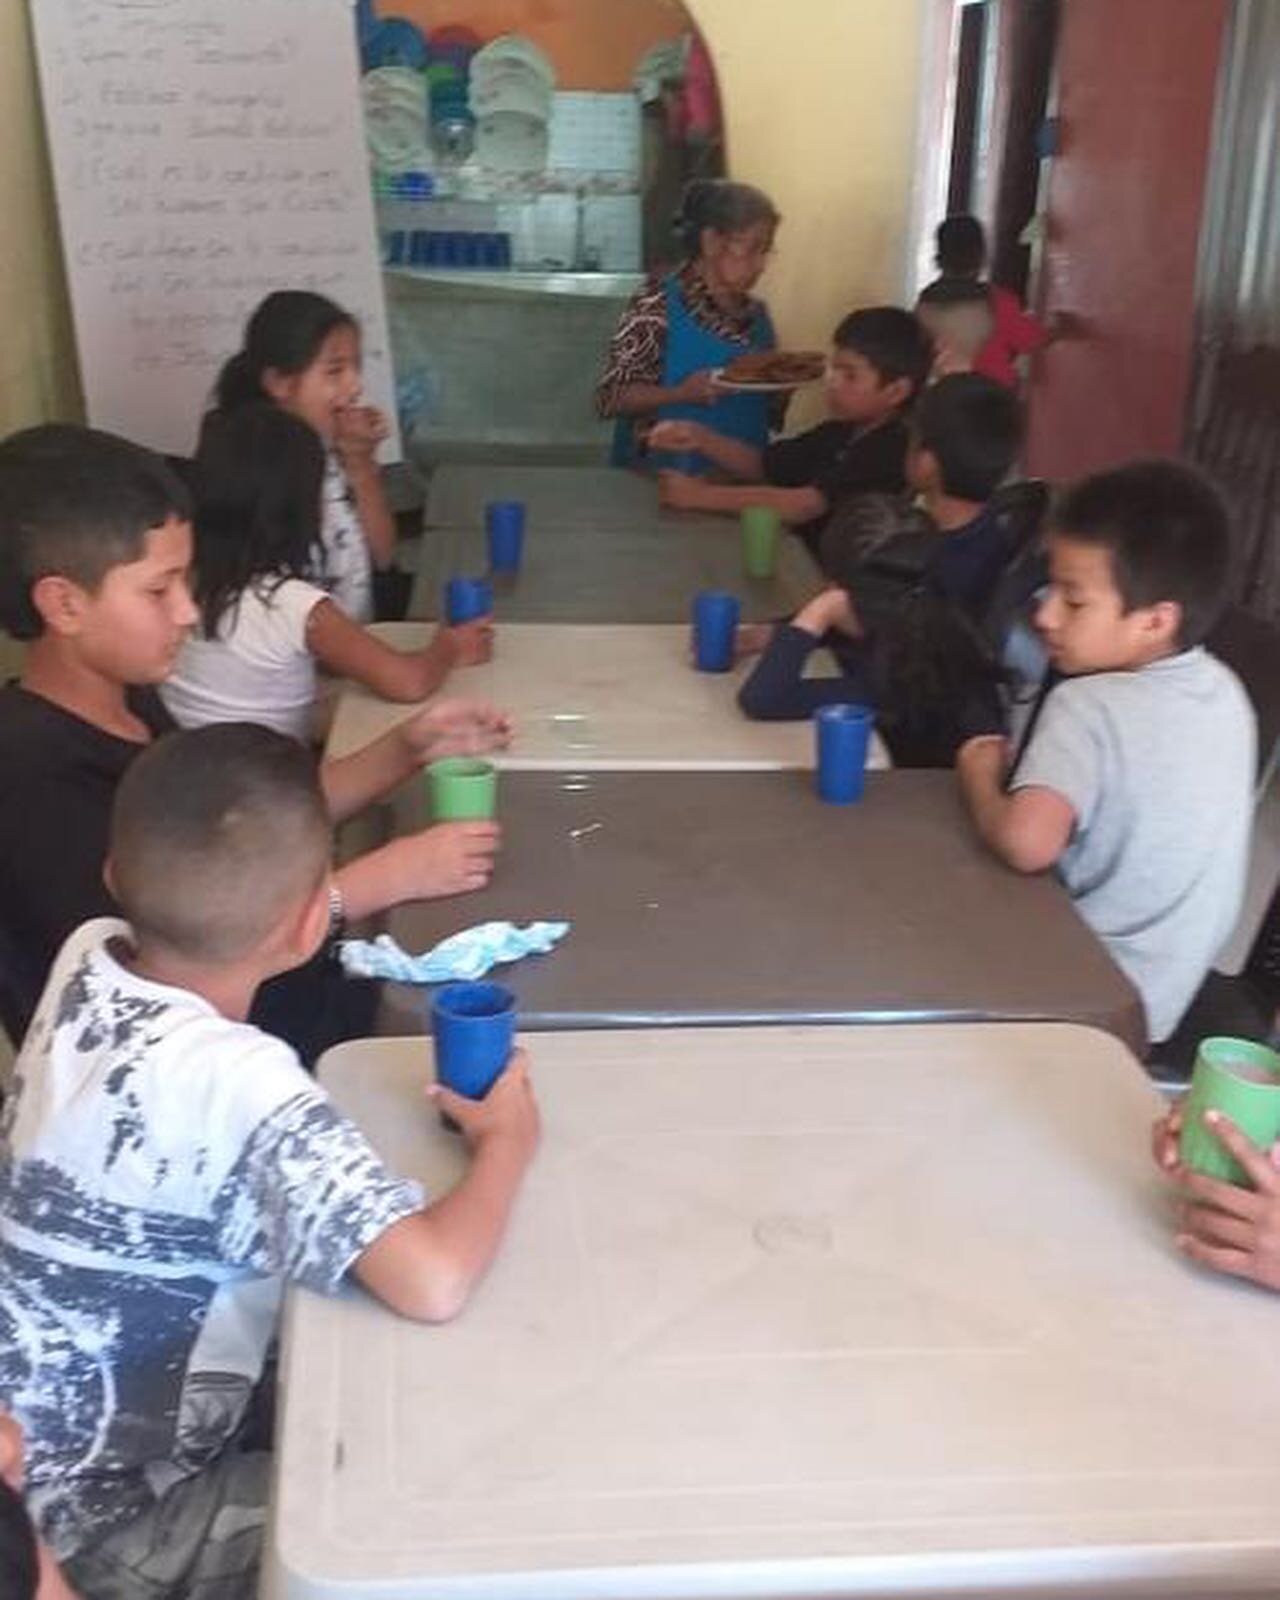 Community center Olivares del Norte children are doing Bible studies, activities and eating snacks. Donate and visit us https://www.migotitadeamorinc.org/
@migotitadeamorinc 
#soupkitchen #popayanco #colombia #helpingpeople #poorchildren #building #n